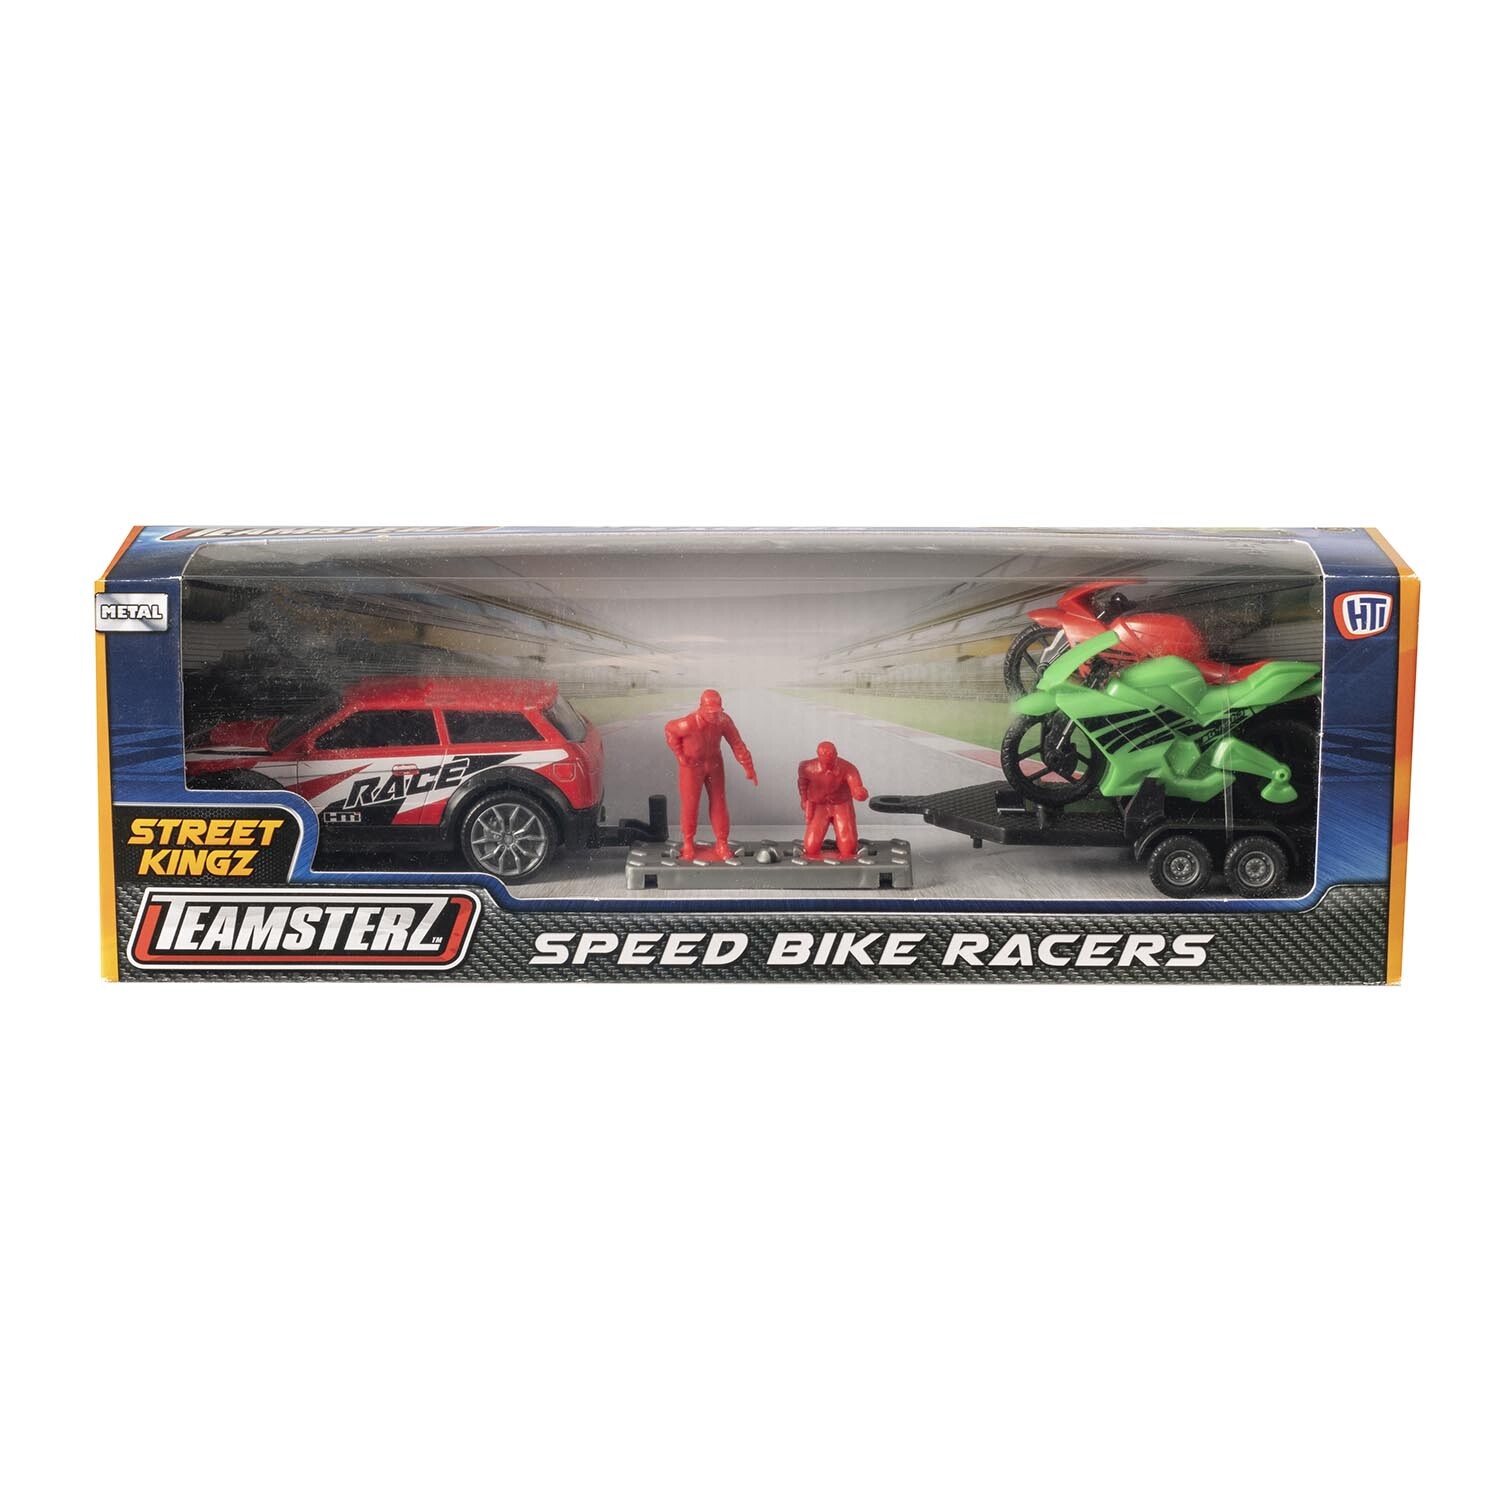 Single Teamsterz Street Kingz Speed Bike Racers in Assorted styles Image